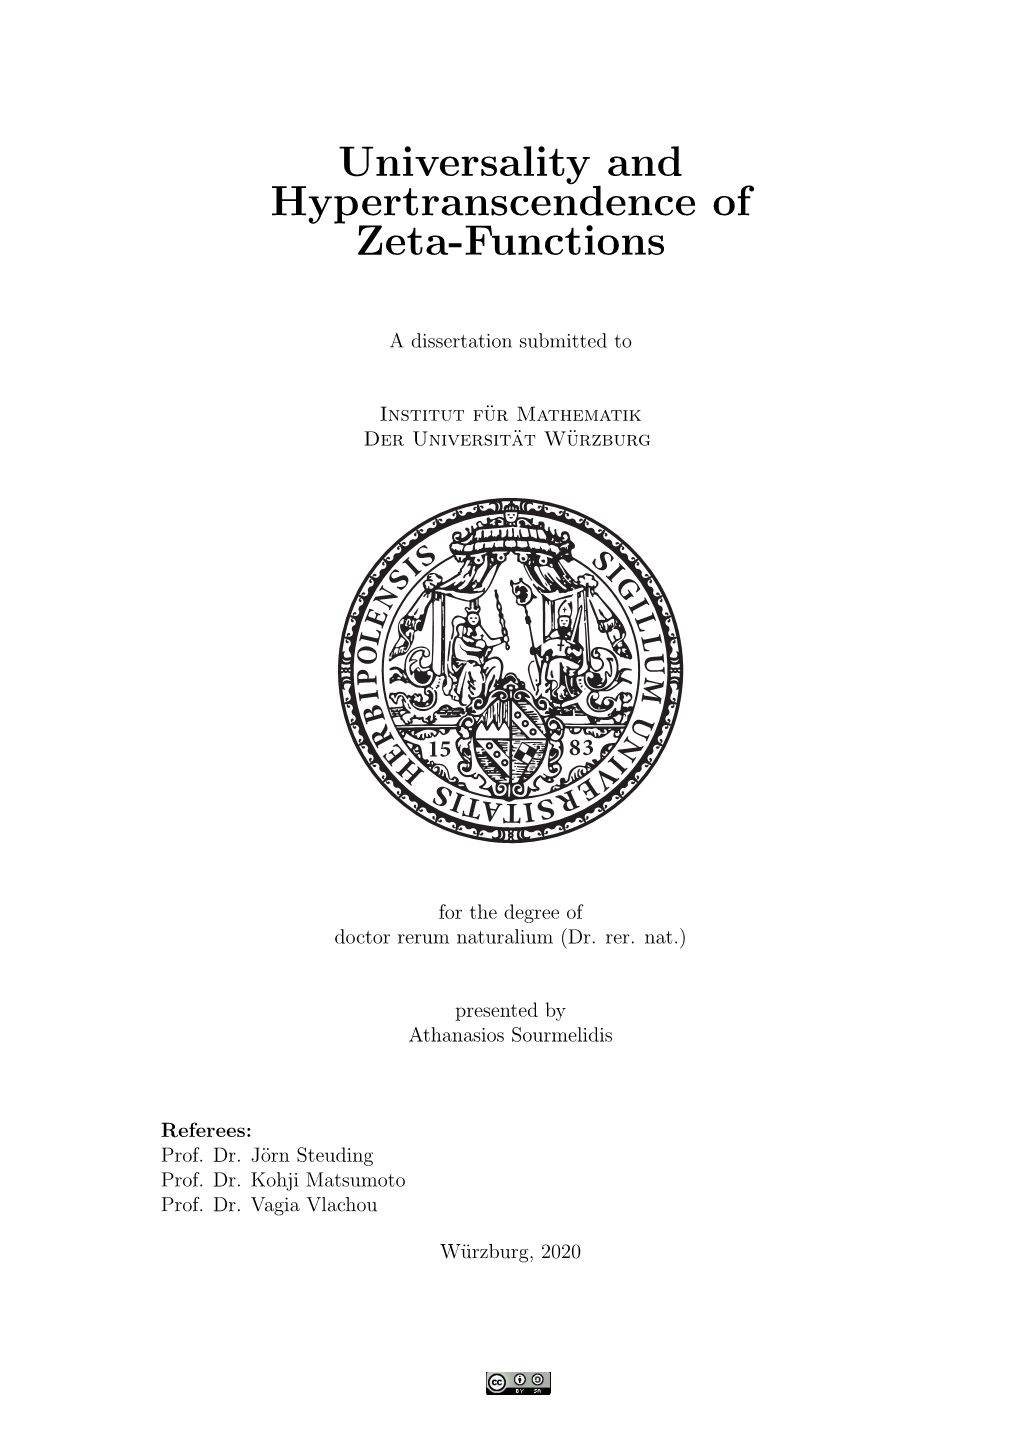 Universality and Hypertranscendence of Zeta-Functions